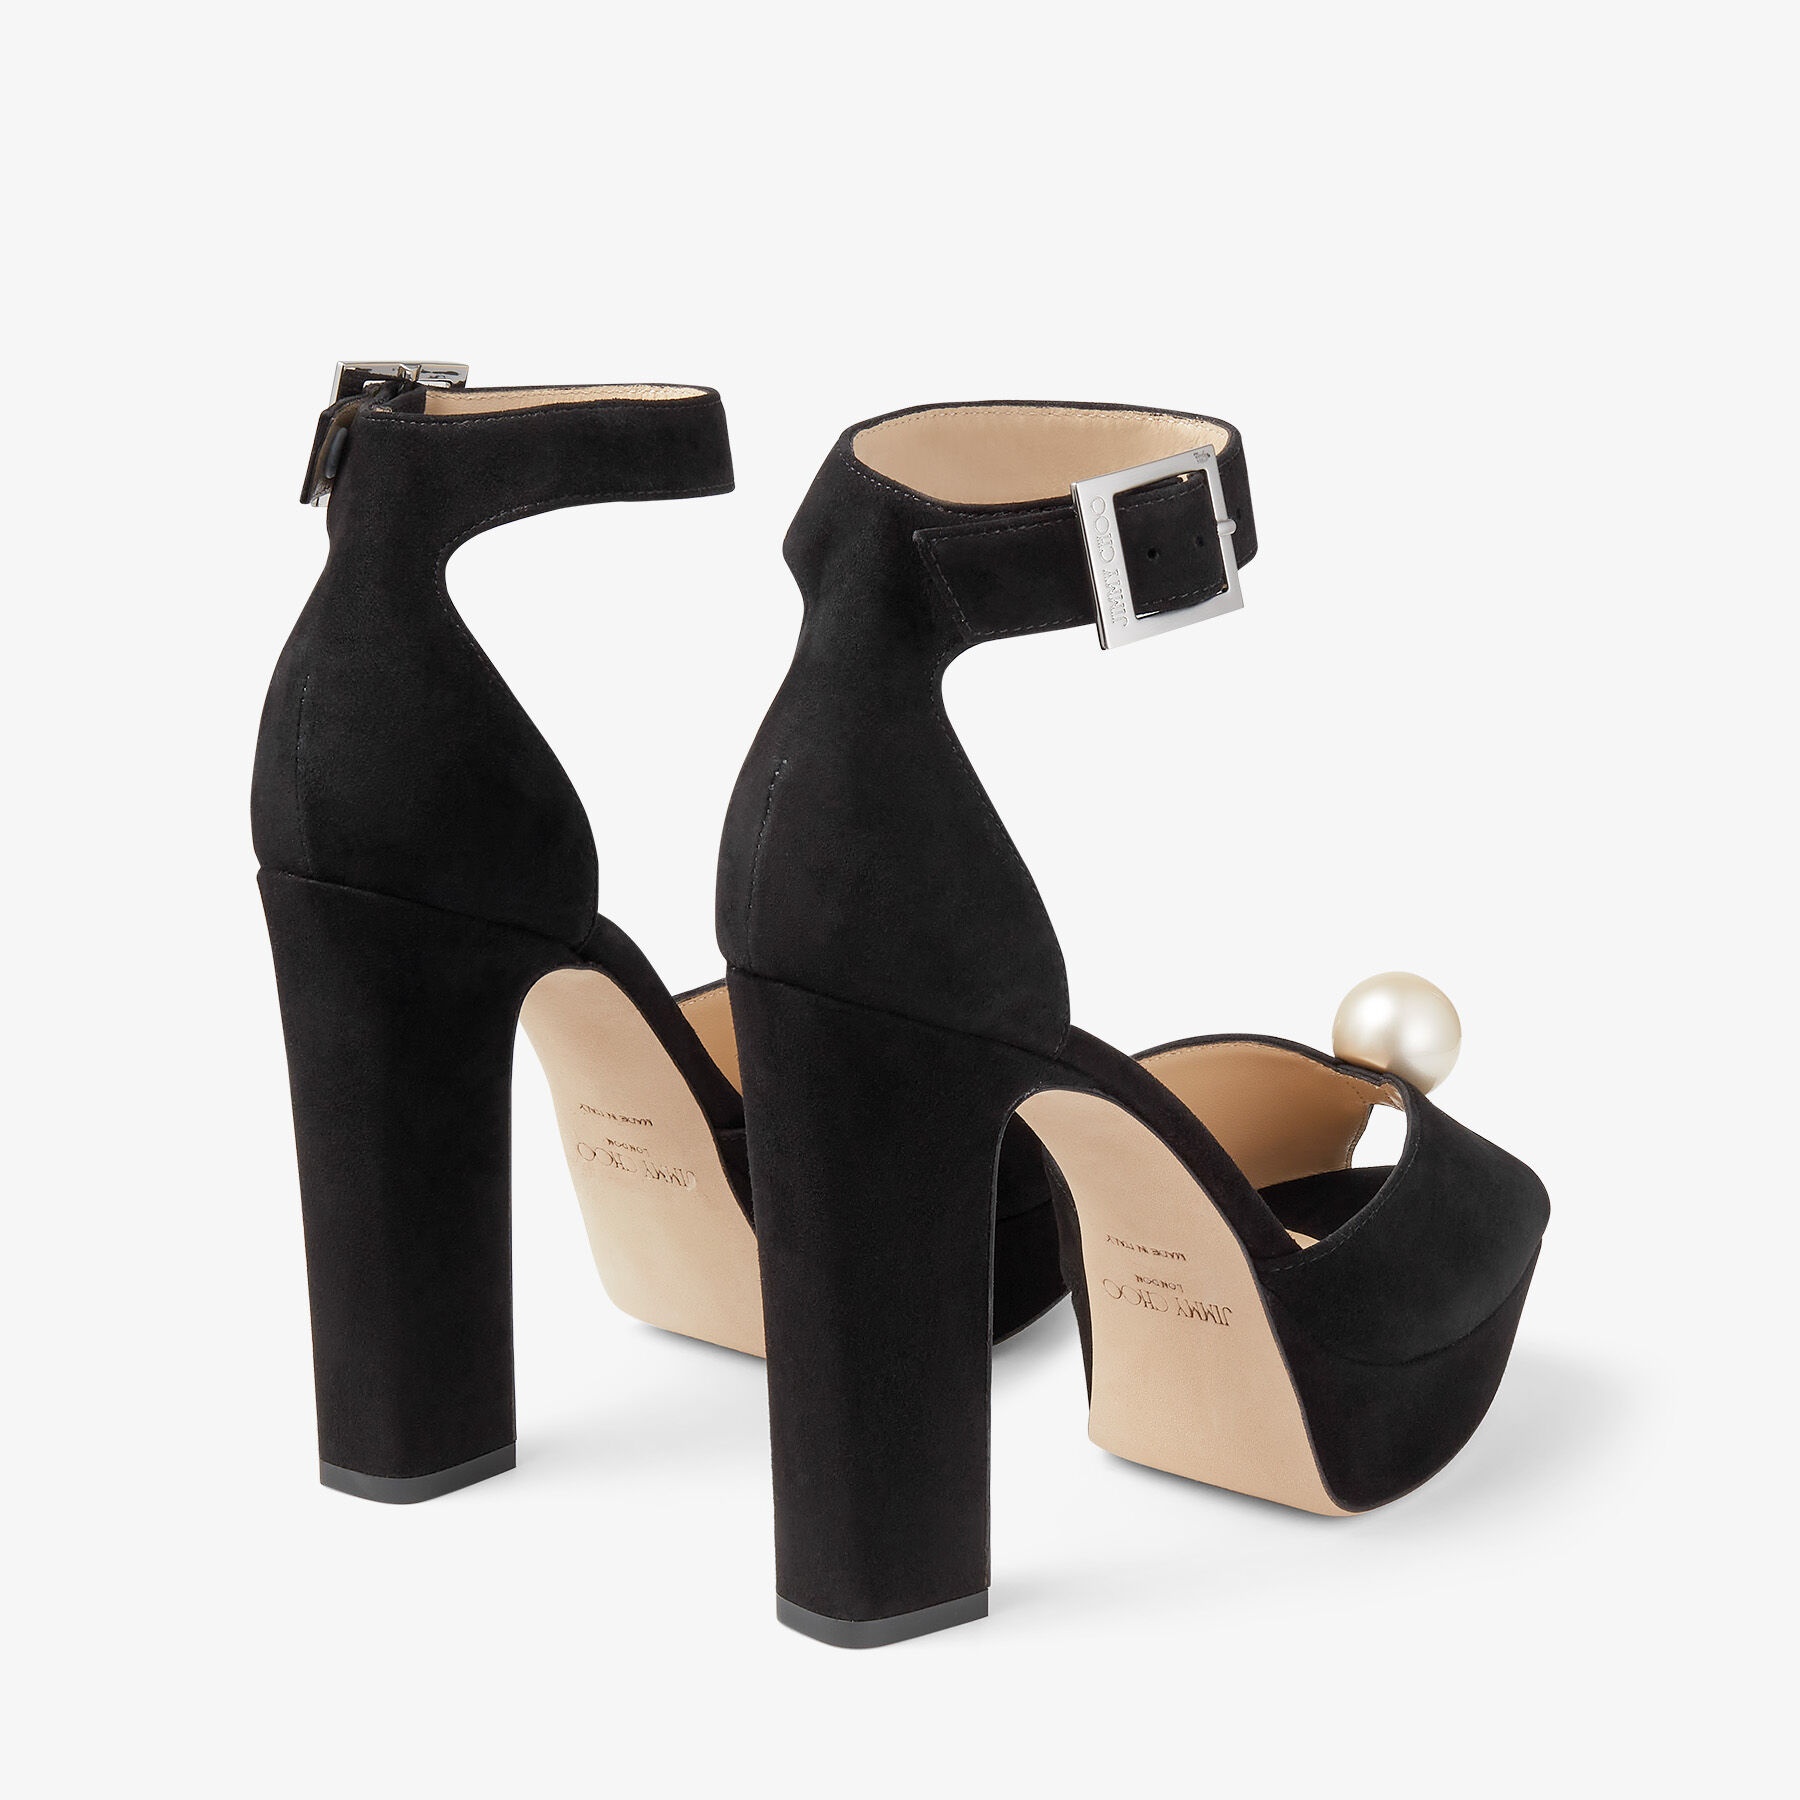 Socorie 120
Black Suede Platform Sandals with Pearl Detailing - 6